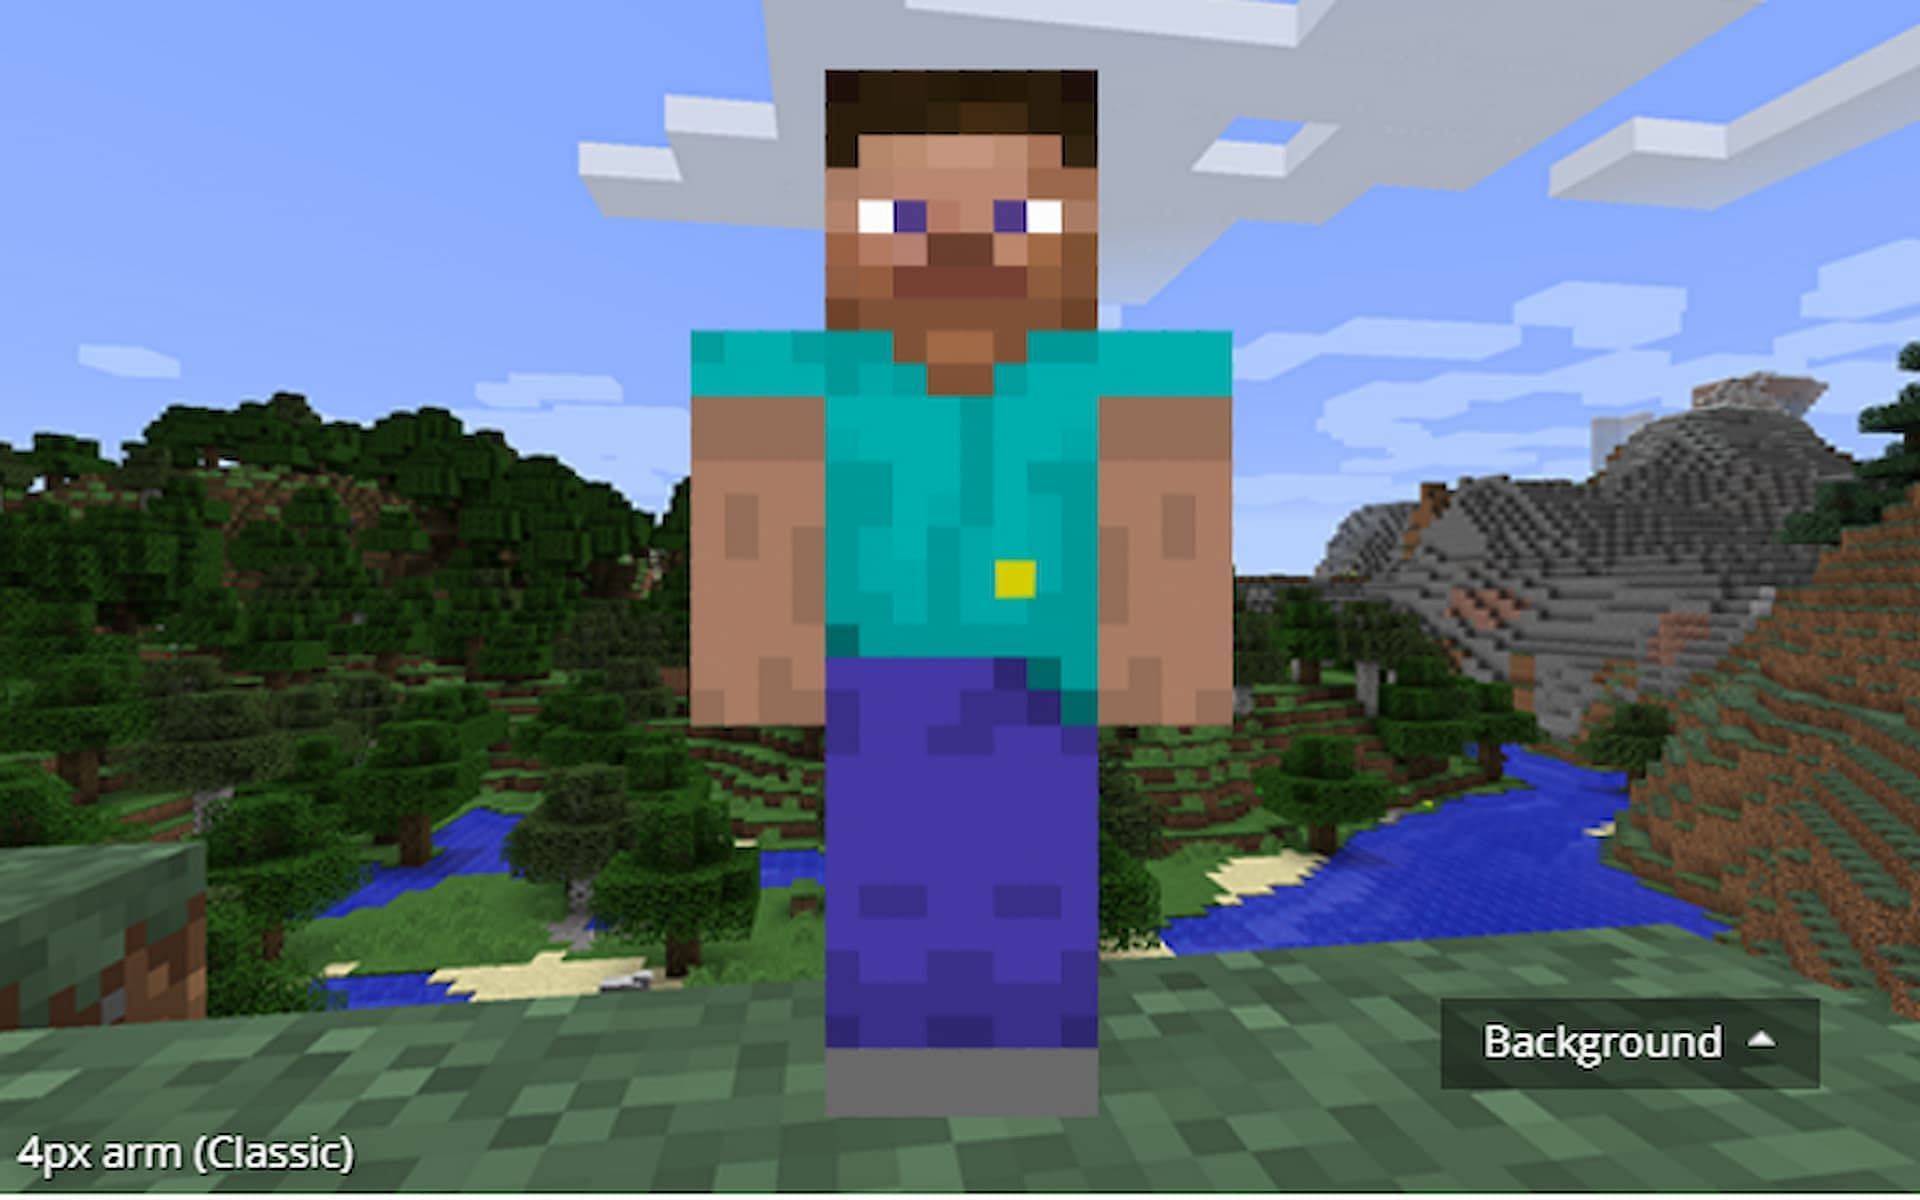 Throwback to the original player model with the Classic Steve skin (Image via Minecraftskins.com)